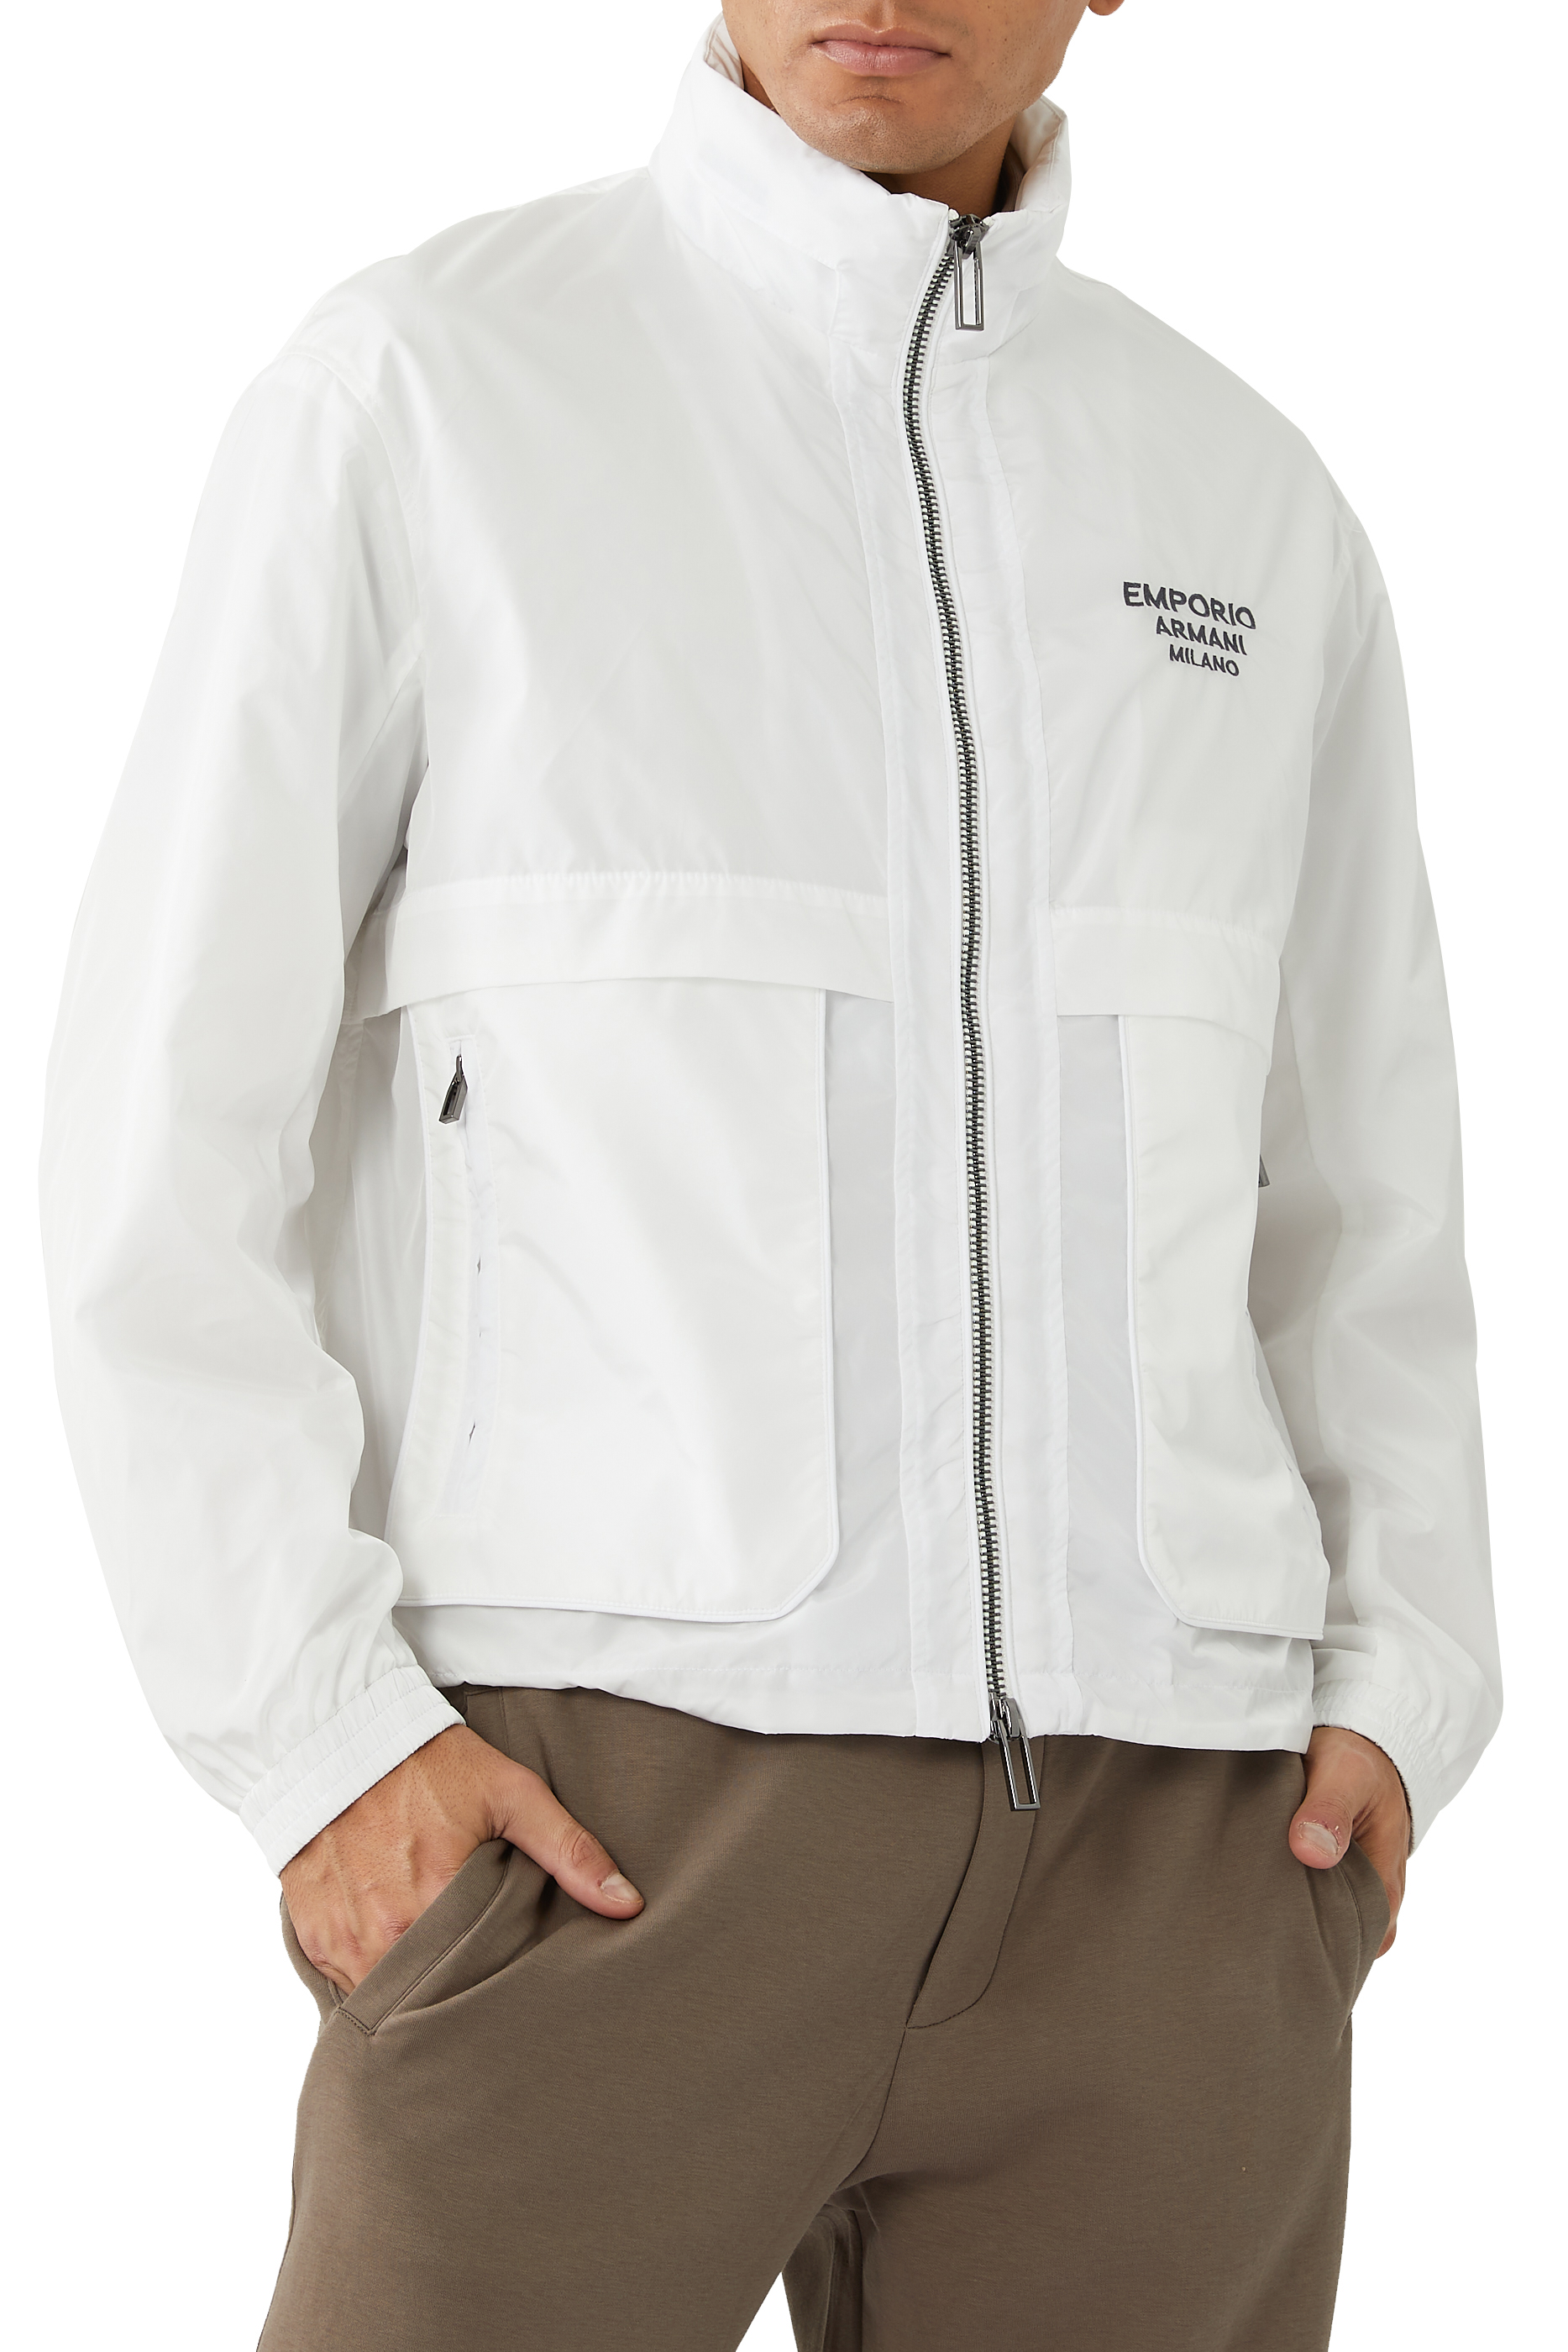 Buy Emporio Armani Nylon Zip Jacket for Mens | Bloomingdale's KSA